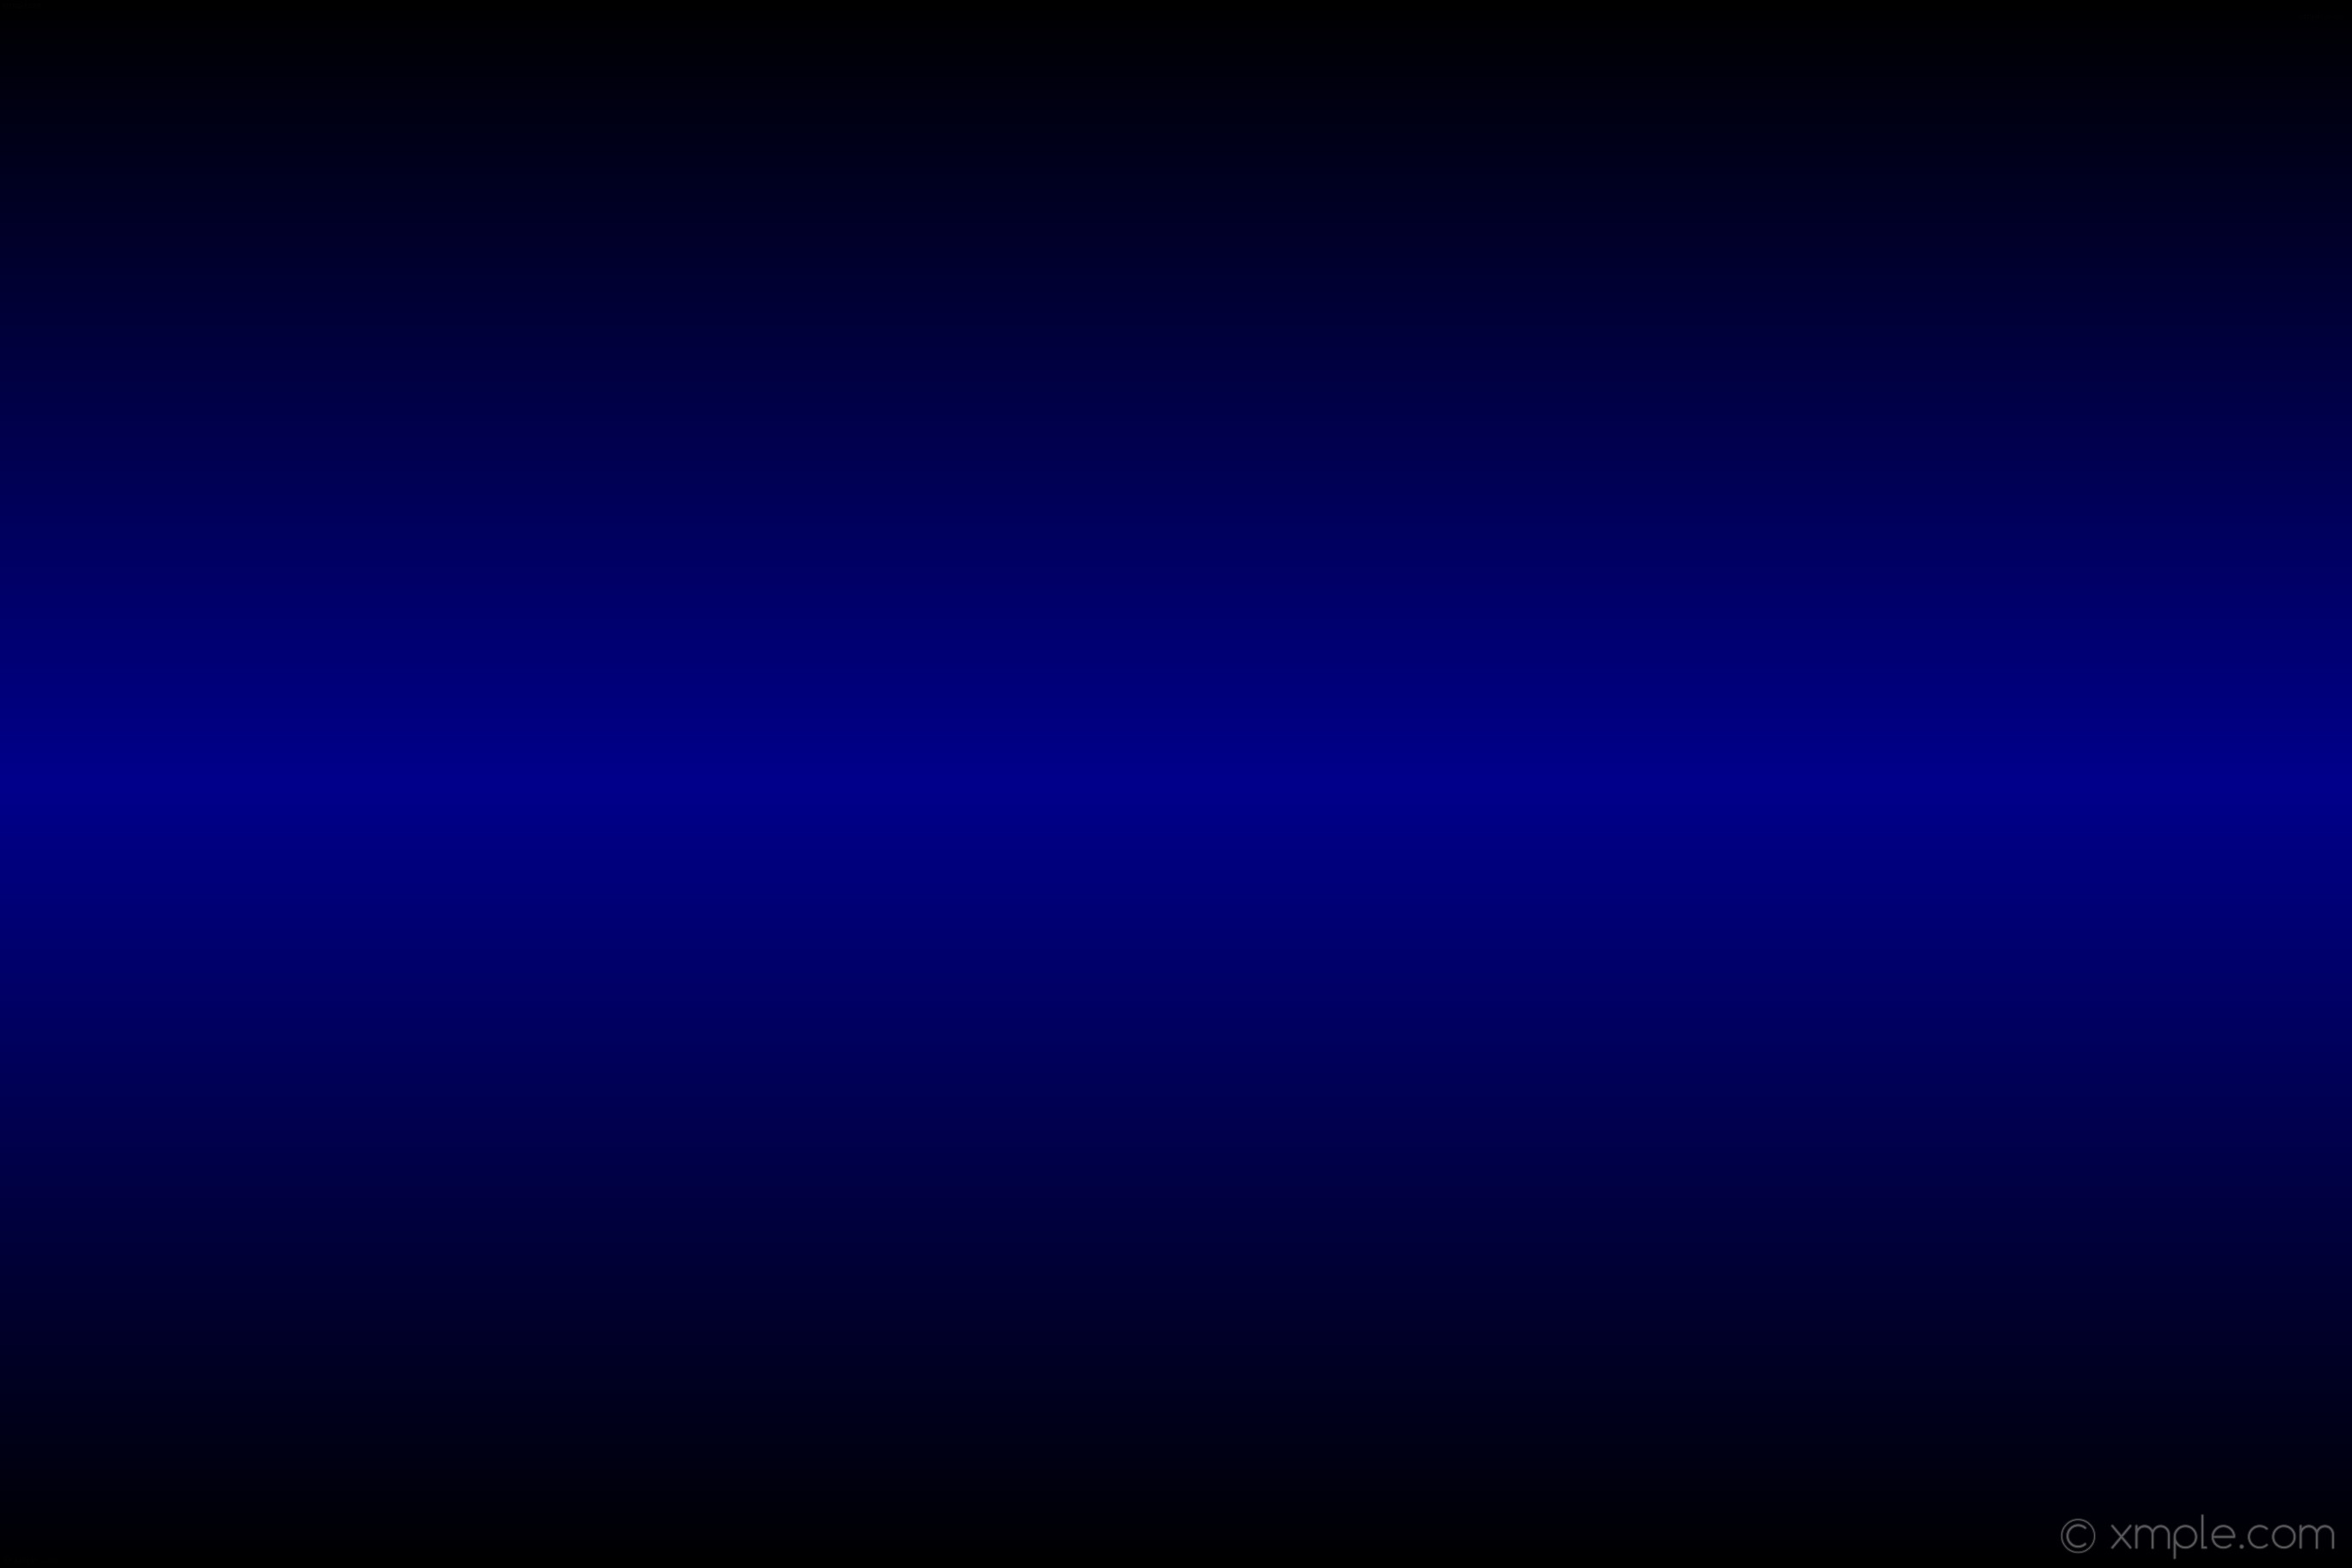 2736x1824 wallpaper linear black highlight blue gradient dark blue #000000 #00008b  270Â° 50%